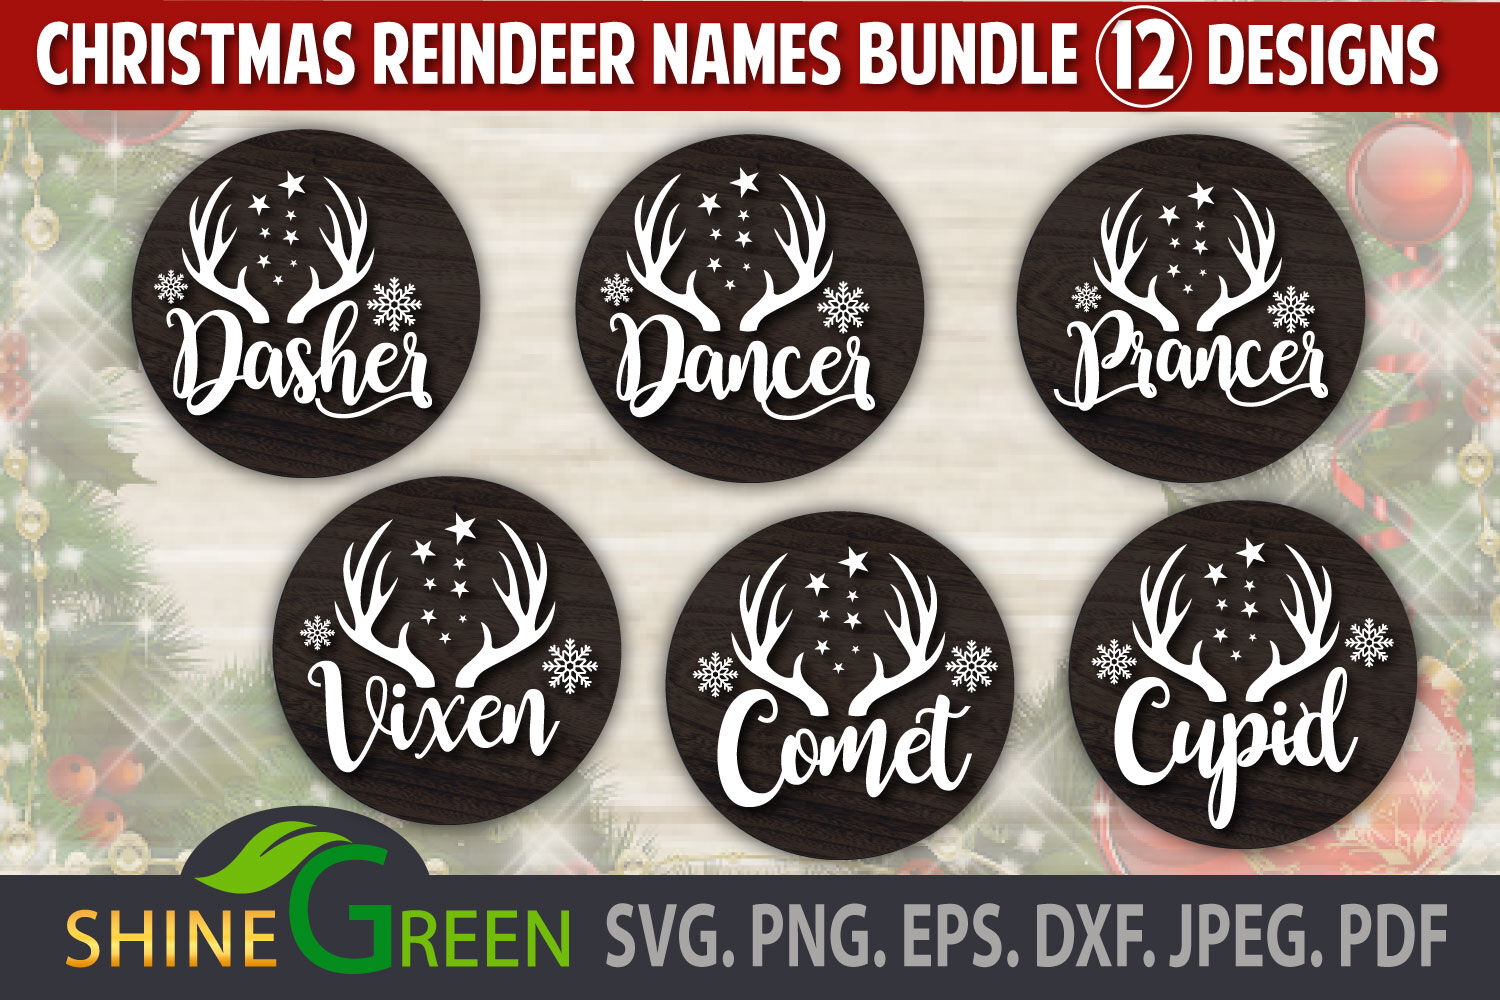 Download Reindeer Names Christmas Svg Bundle Ornaments Dxf Png Eps By Shinegreenart Thehungryjpeg Com